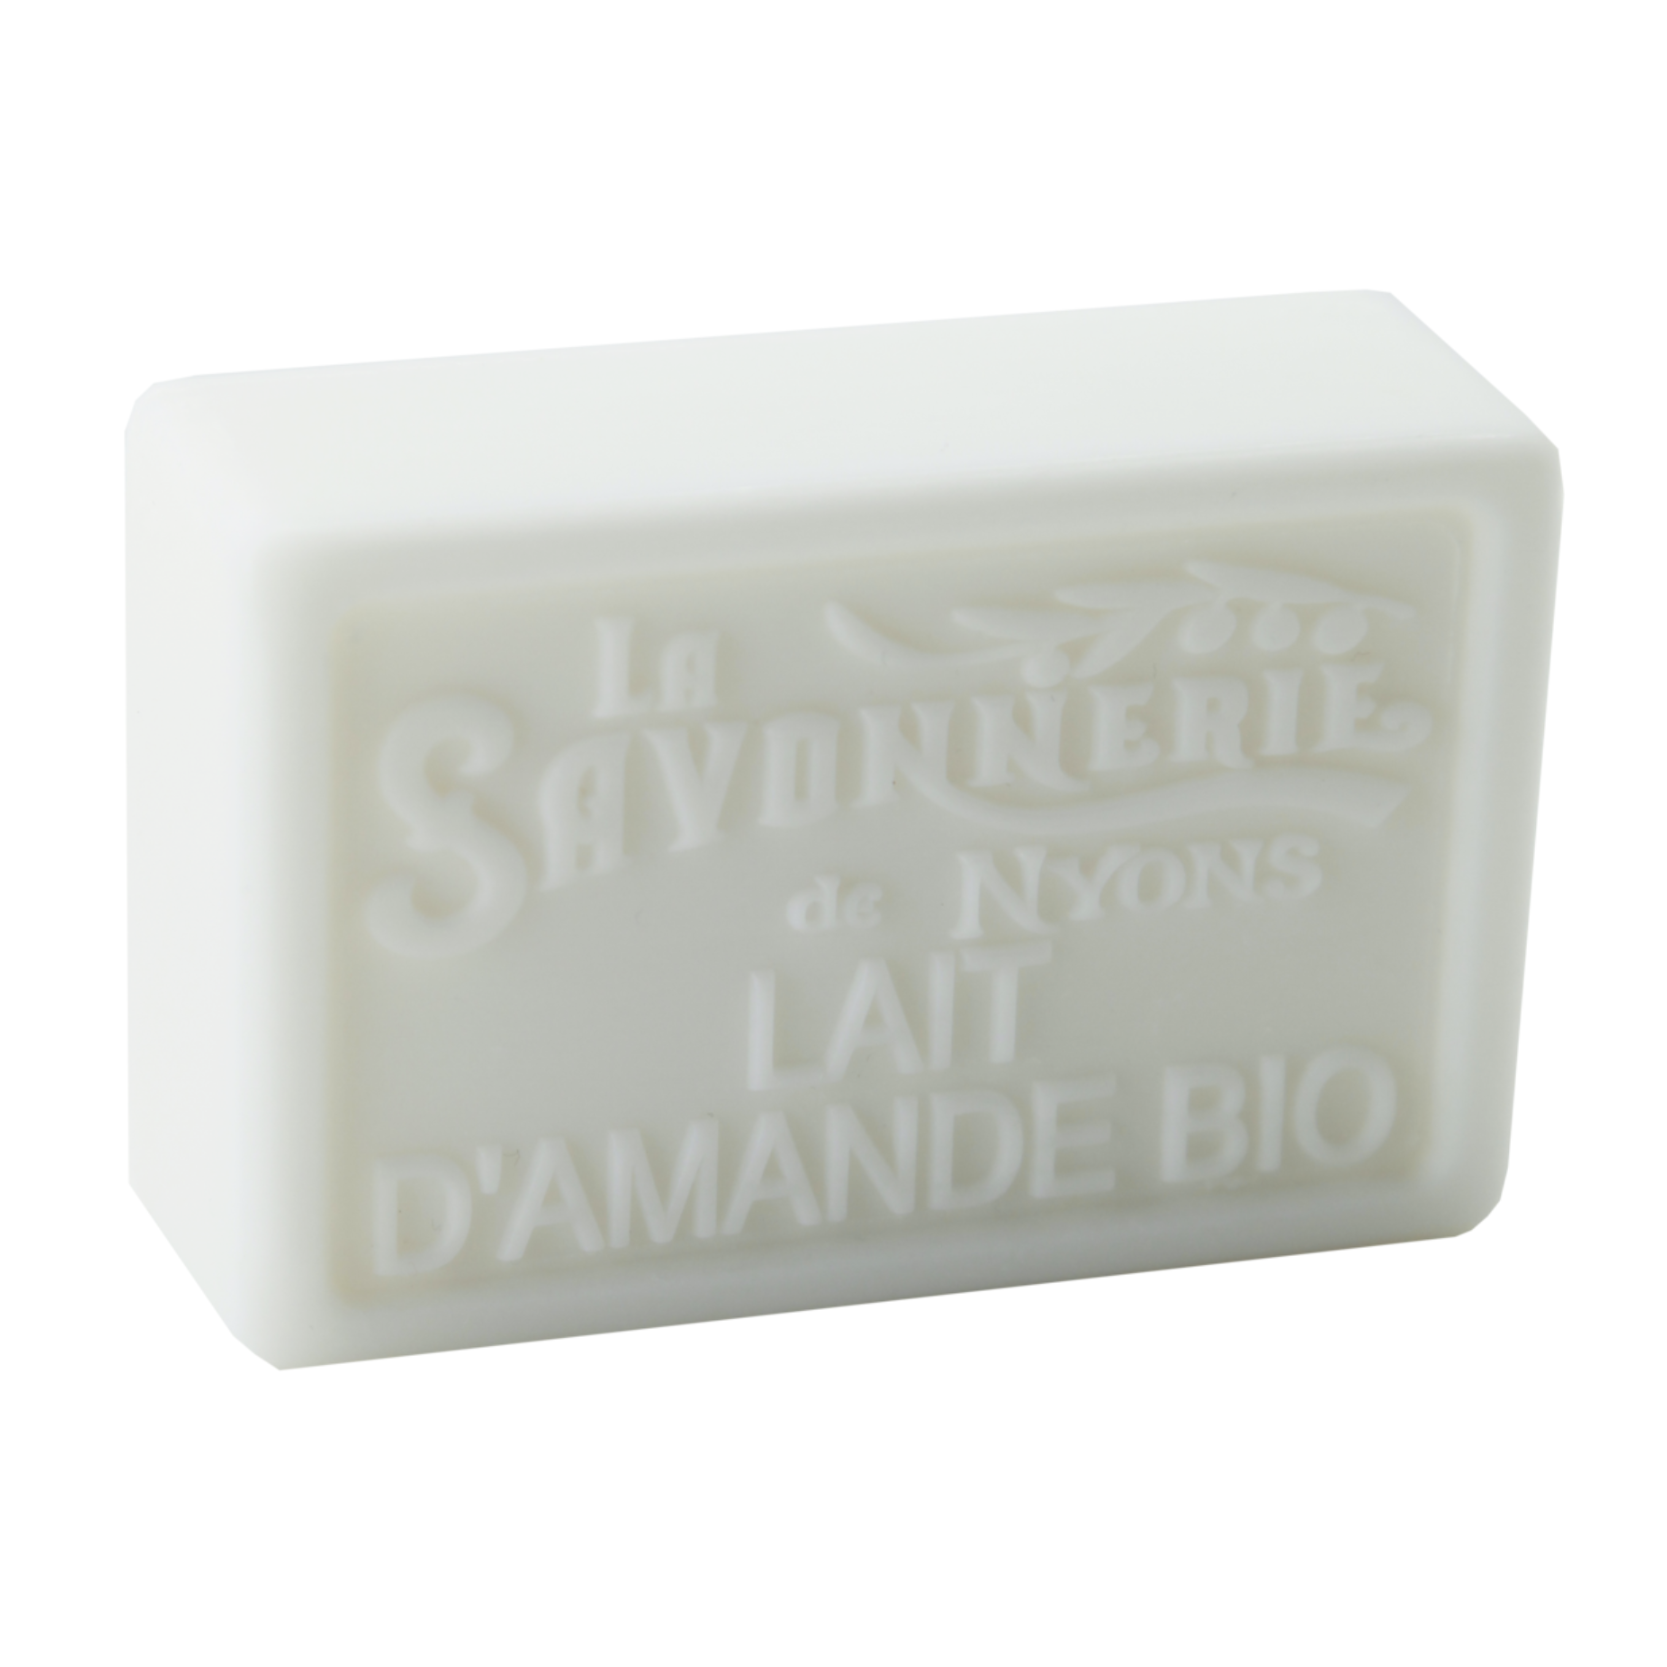 Organic Almond Milk Soap, 3.5oz